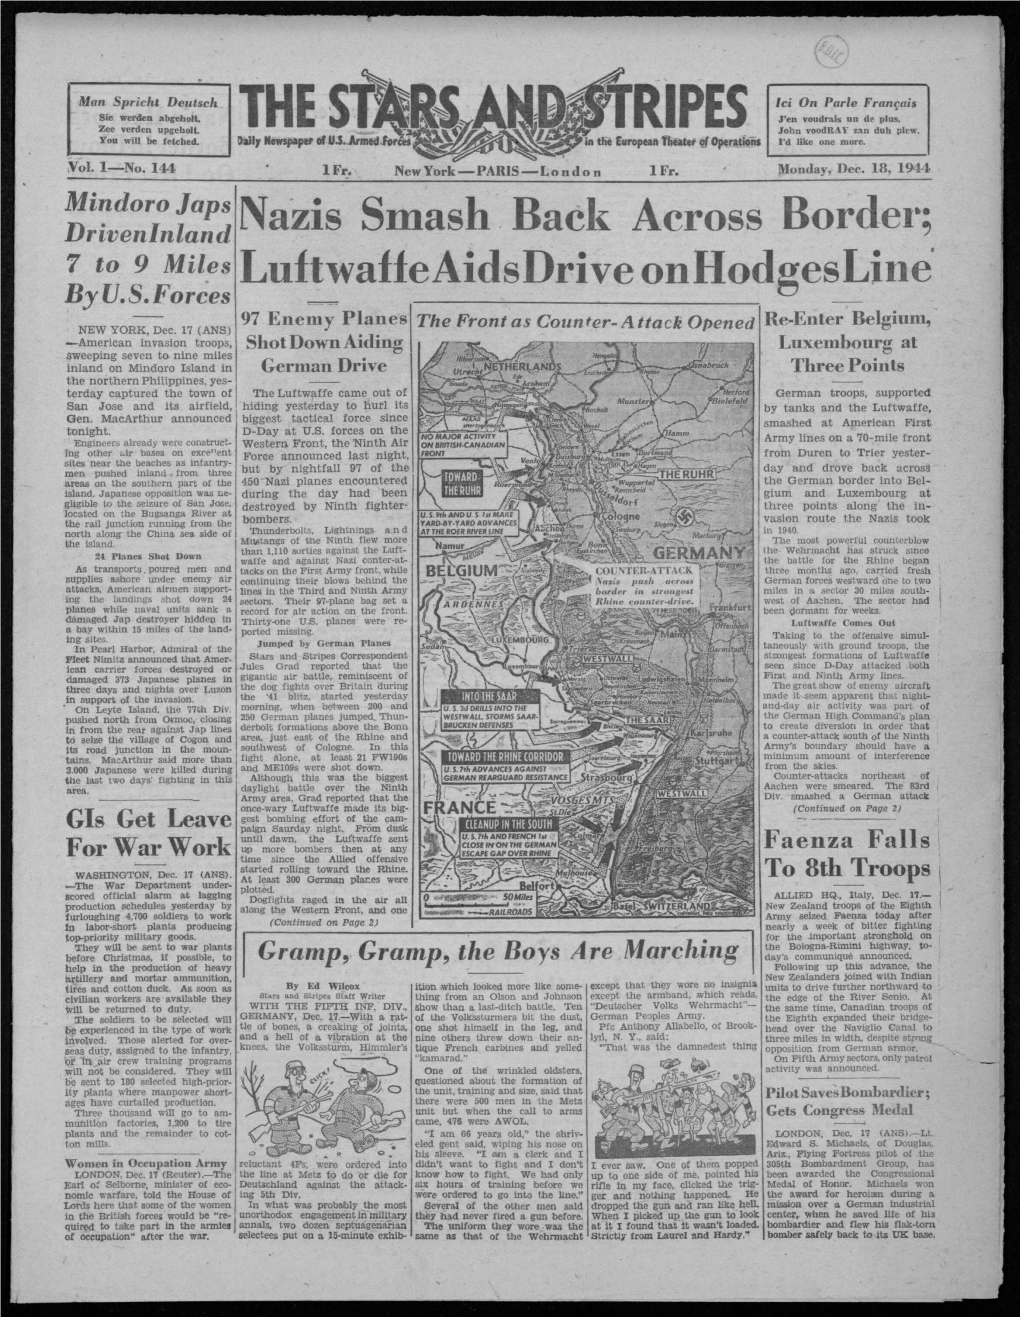 Nazis Smash Back Across Border; 7 to 9 Miles Luftwaffeaidsdrive Onhodgesline Byu.S.Forces 97 Enemy Planes Re-Enter Belgium, NEW YORK, Dec